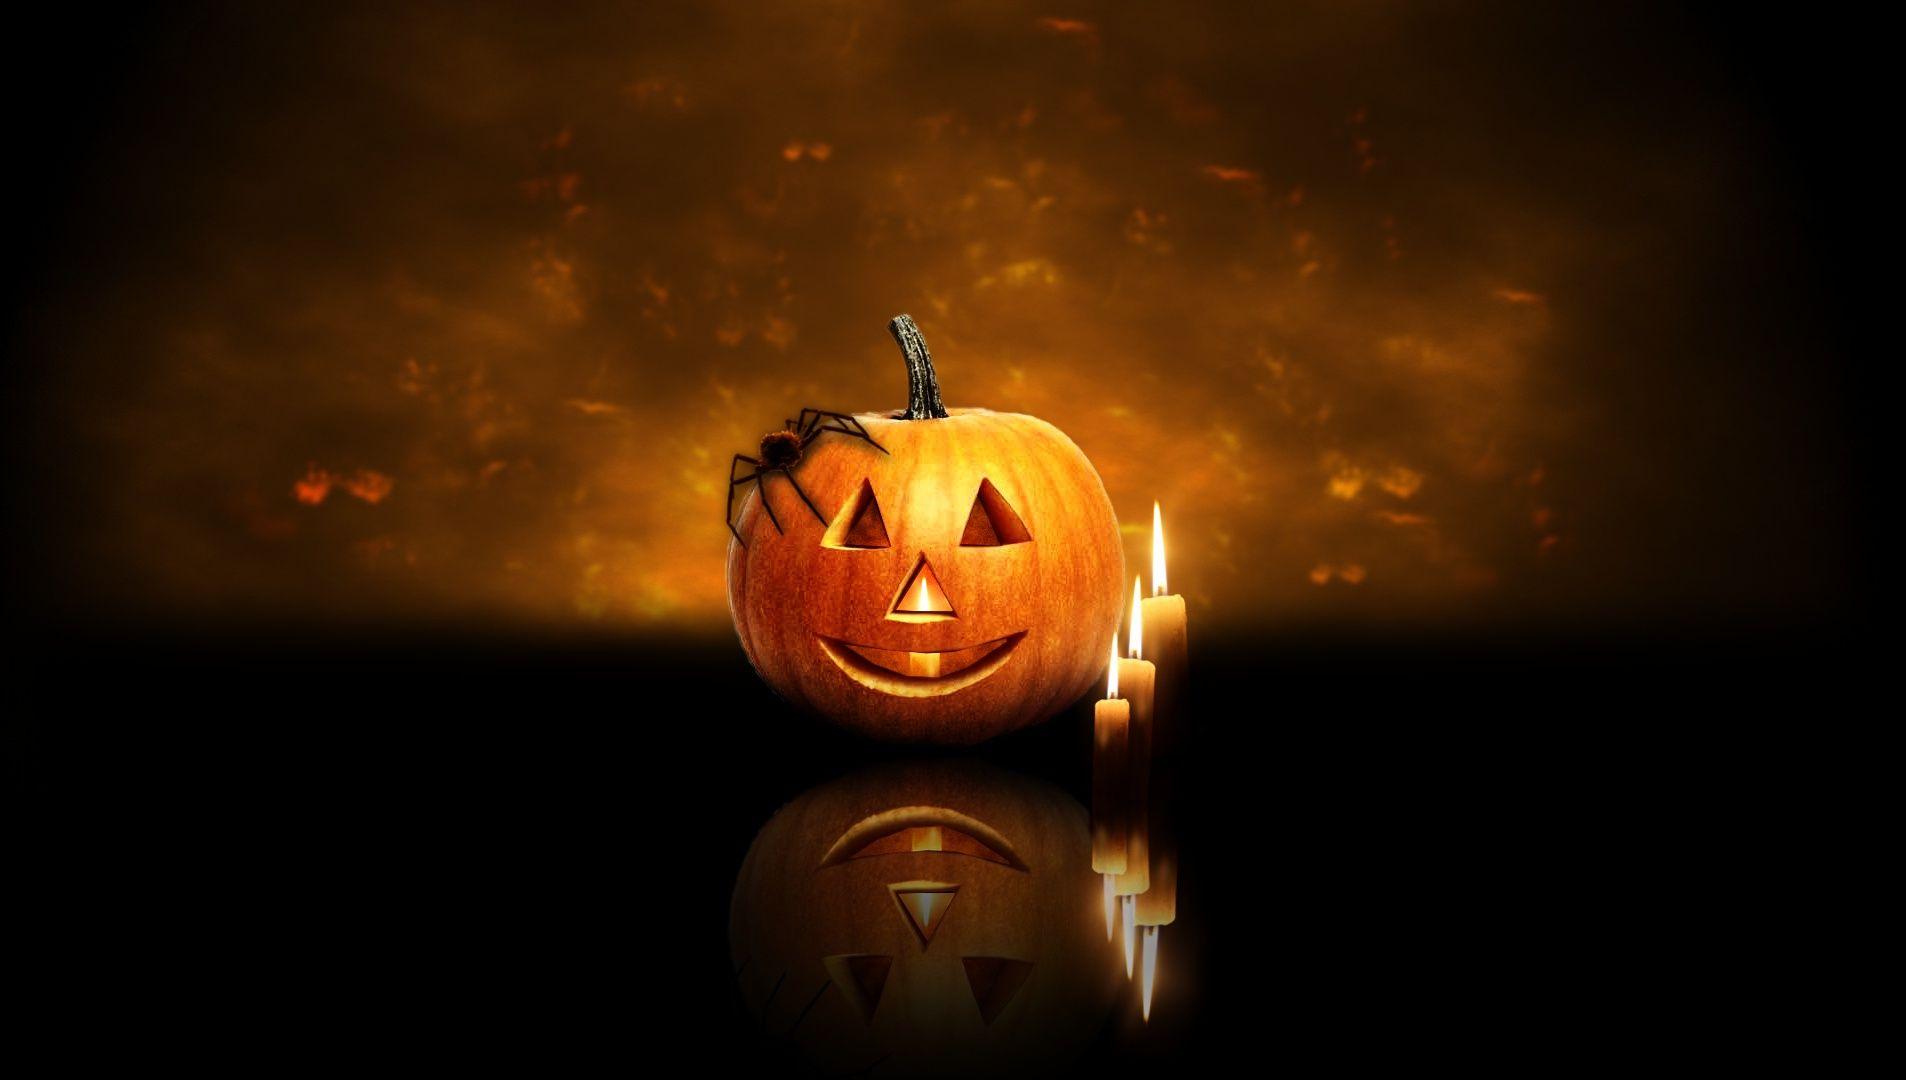 Wallpaper For > Halloween Pumpkin Desktop Background